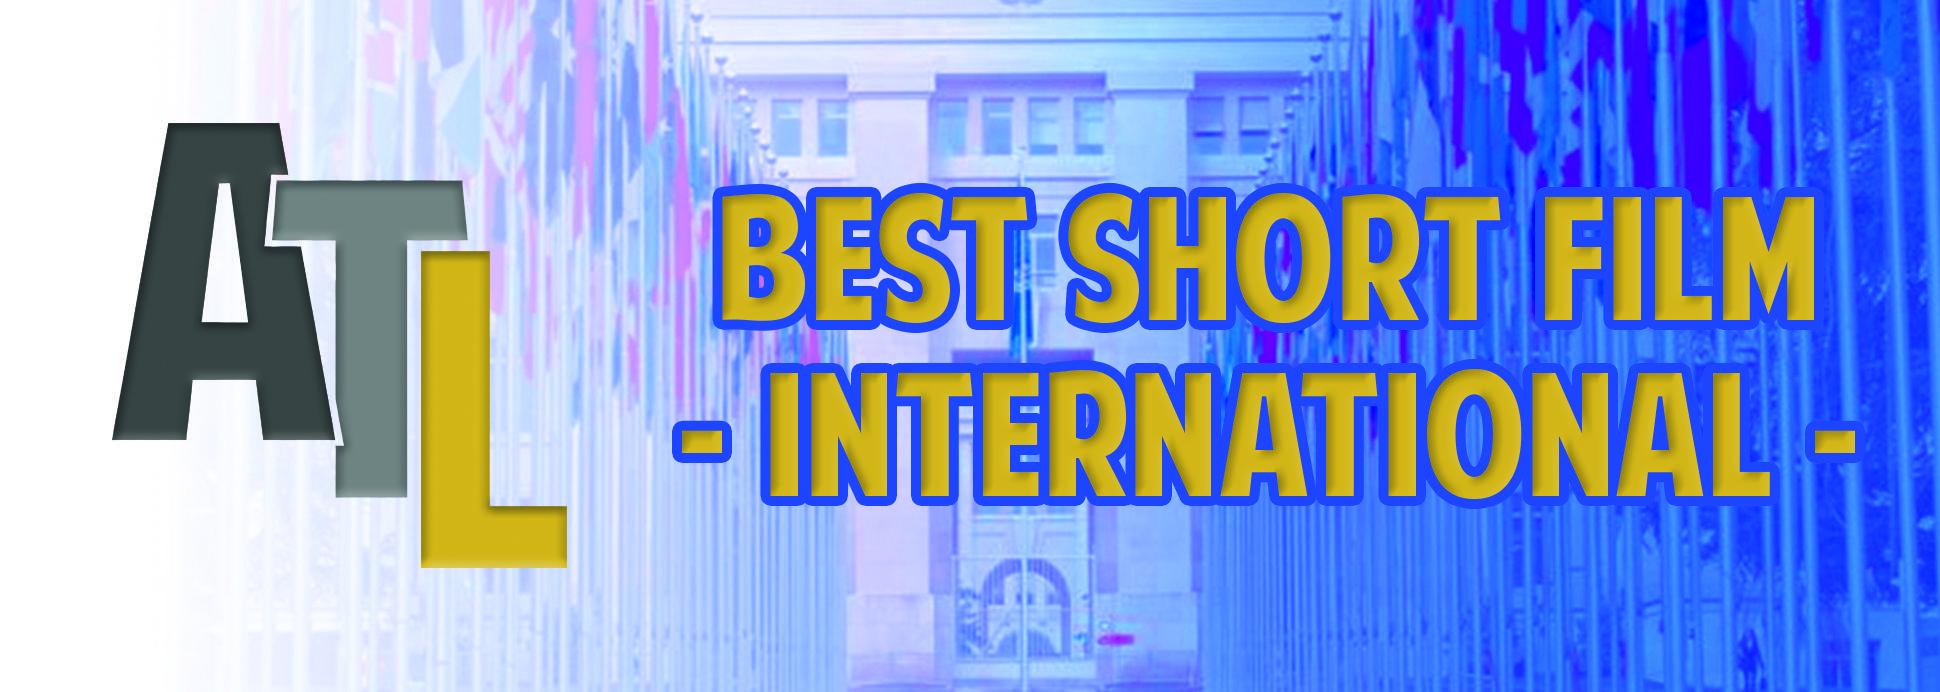 Best Short Film - International